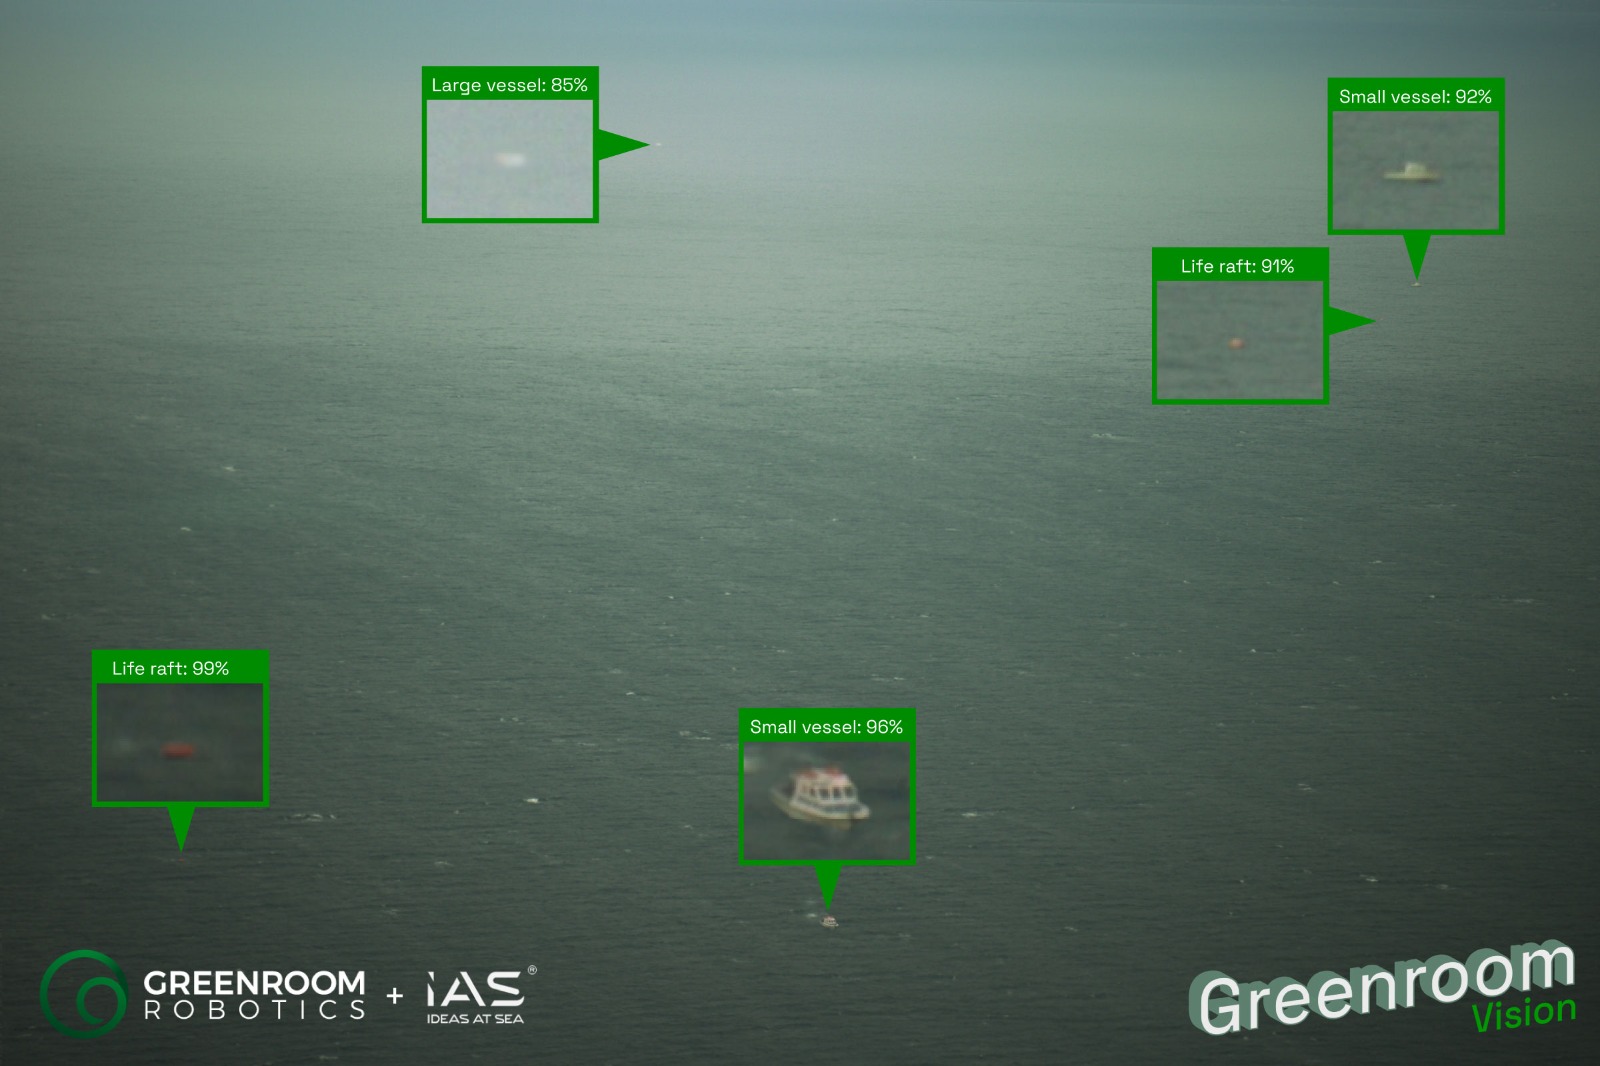 Cover Image for Greenroom Robotics deliver next-generation software for maritime SAR